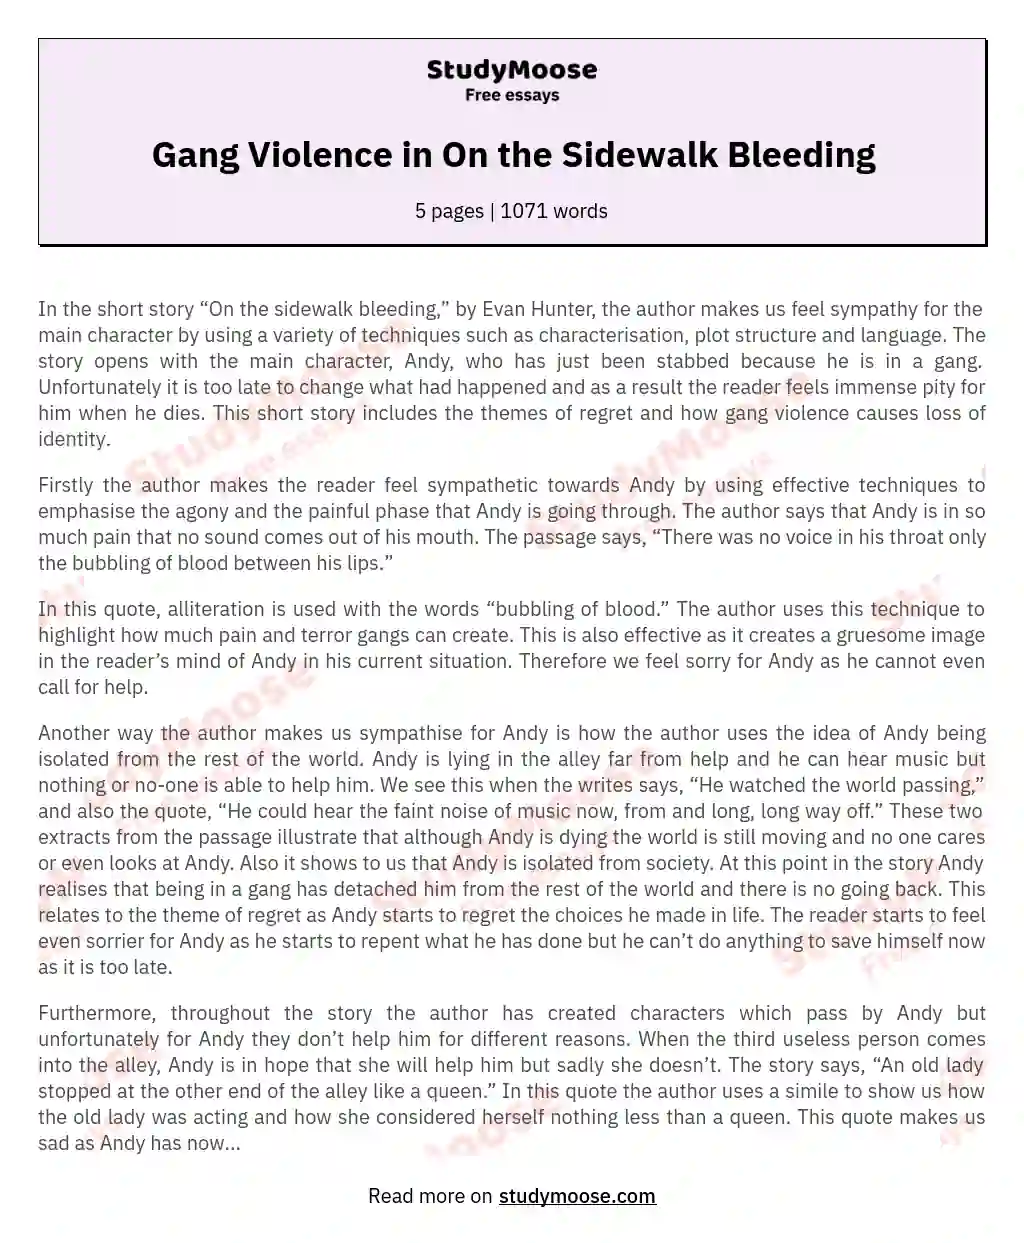 Gang Violence in On the Sidewalk Bleeding